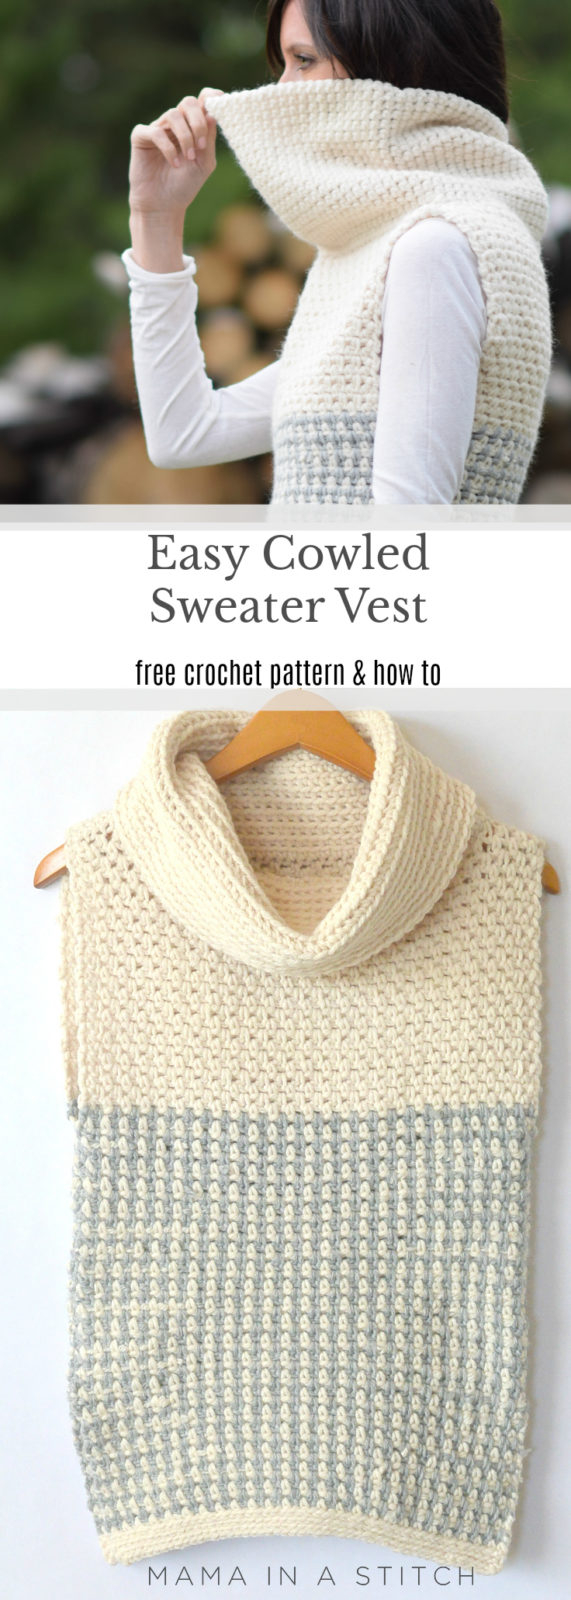 Crochet Sweater Vest Pattern Free Easy Crochet Cowled Sweater Vest Mama In A Stitch